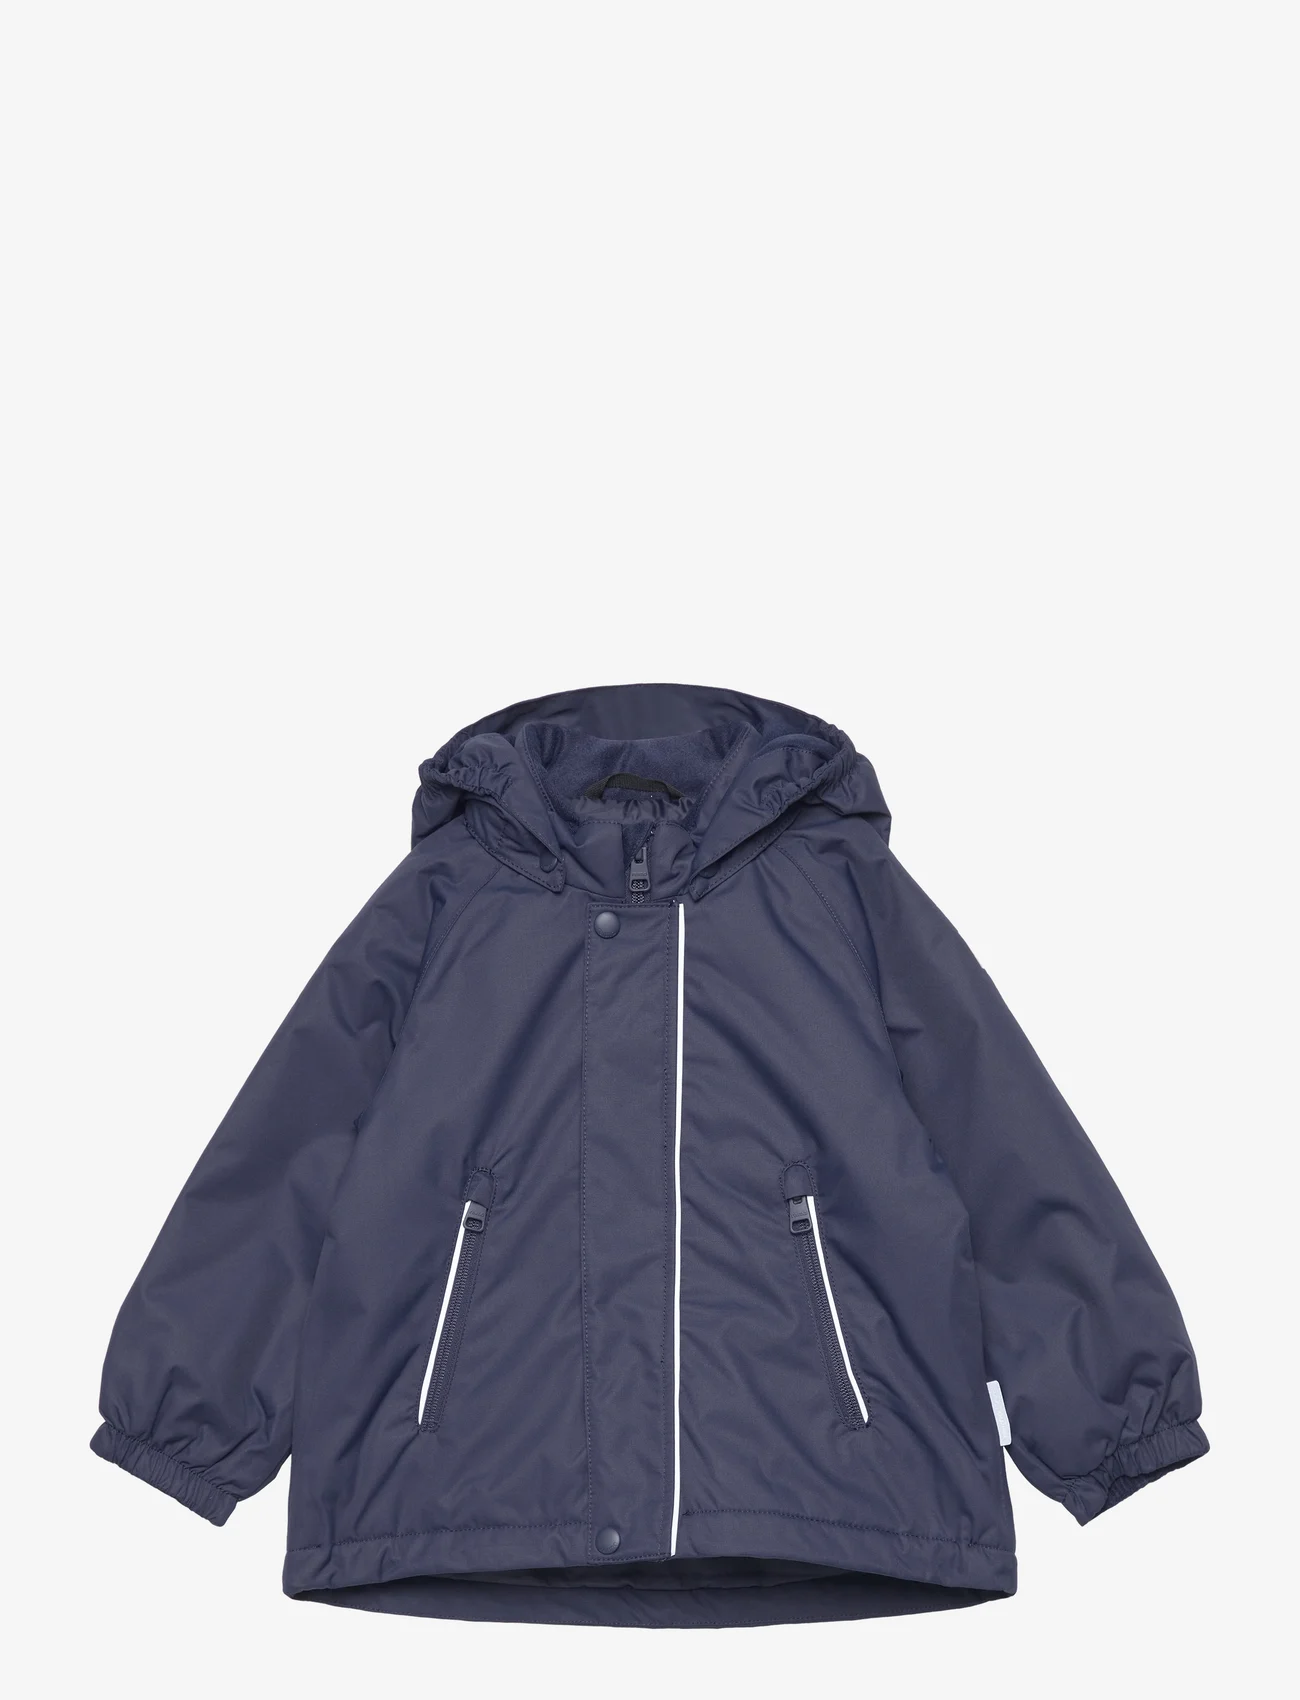 Reima - Reimatec winter jacket, Ruis - winter jackets - navy - 0